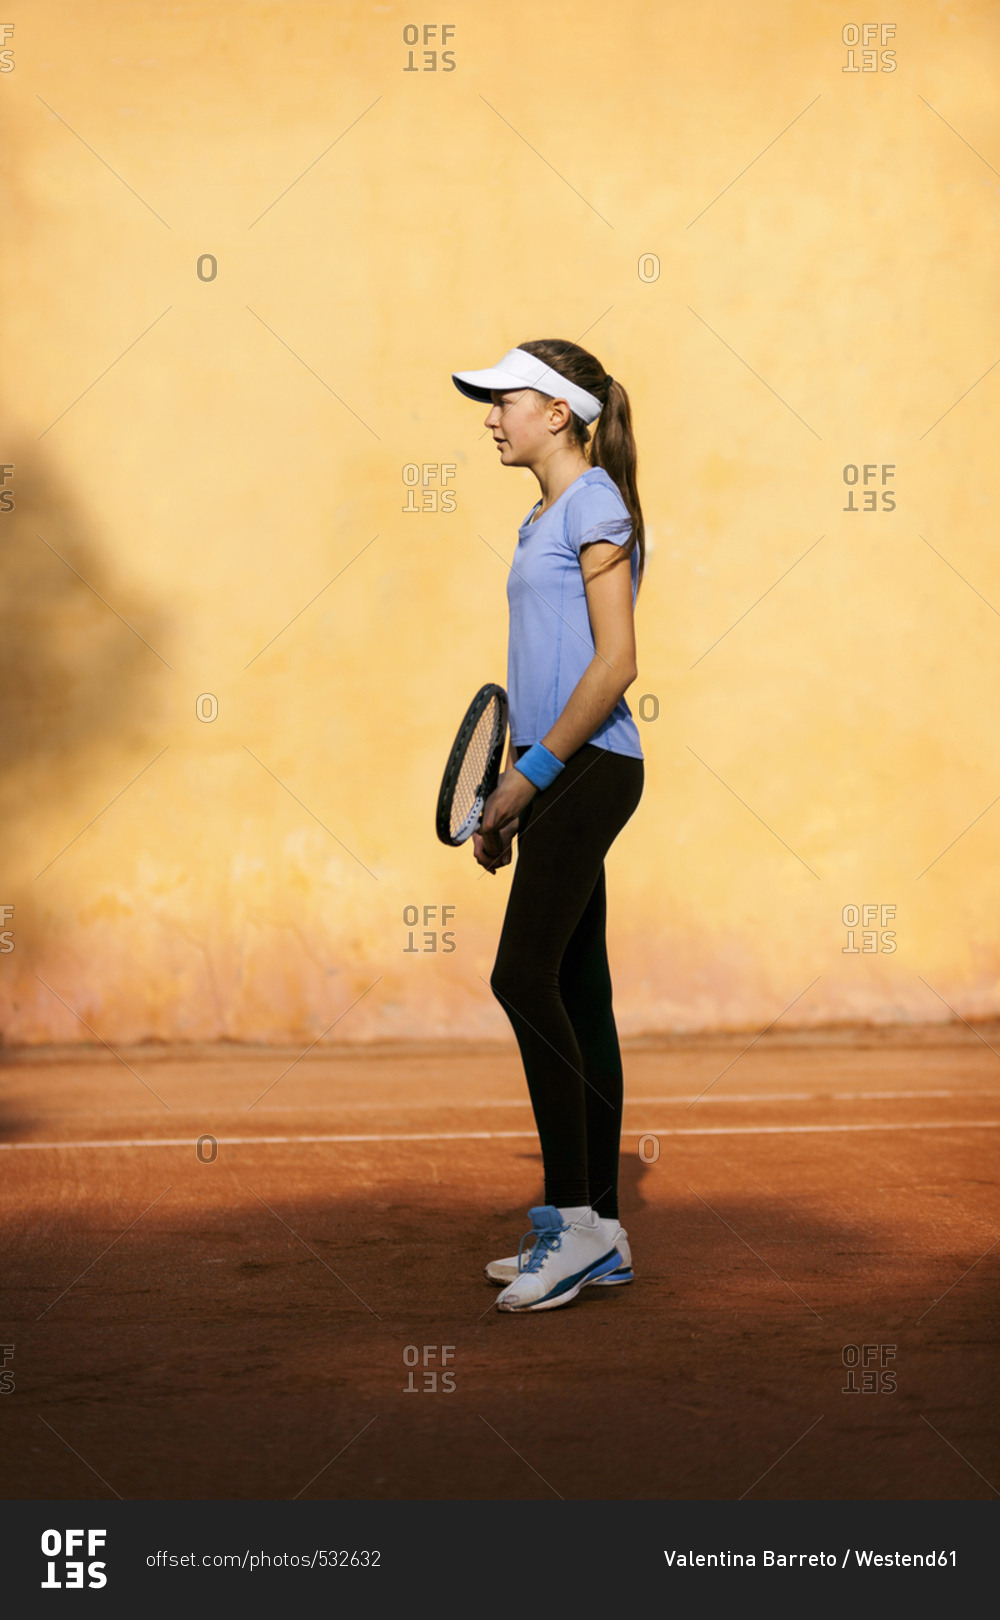 Teenage girl standing on tennis court